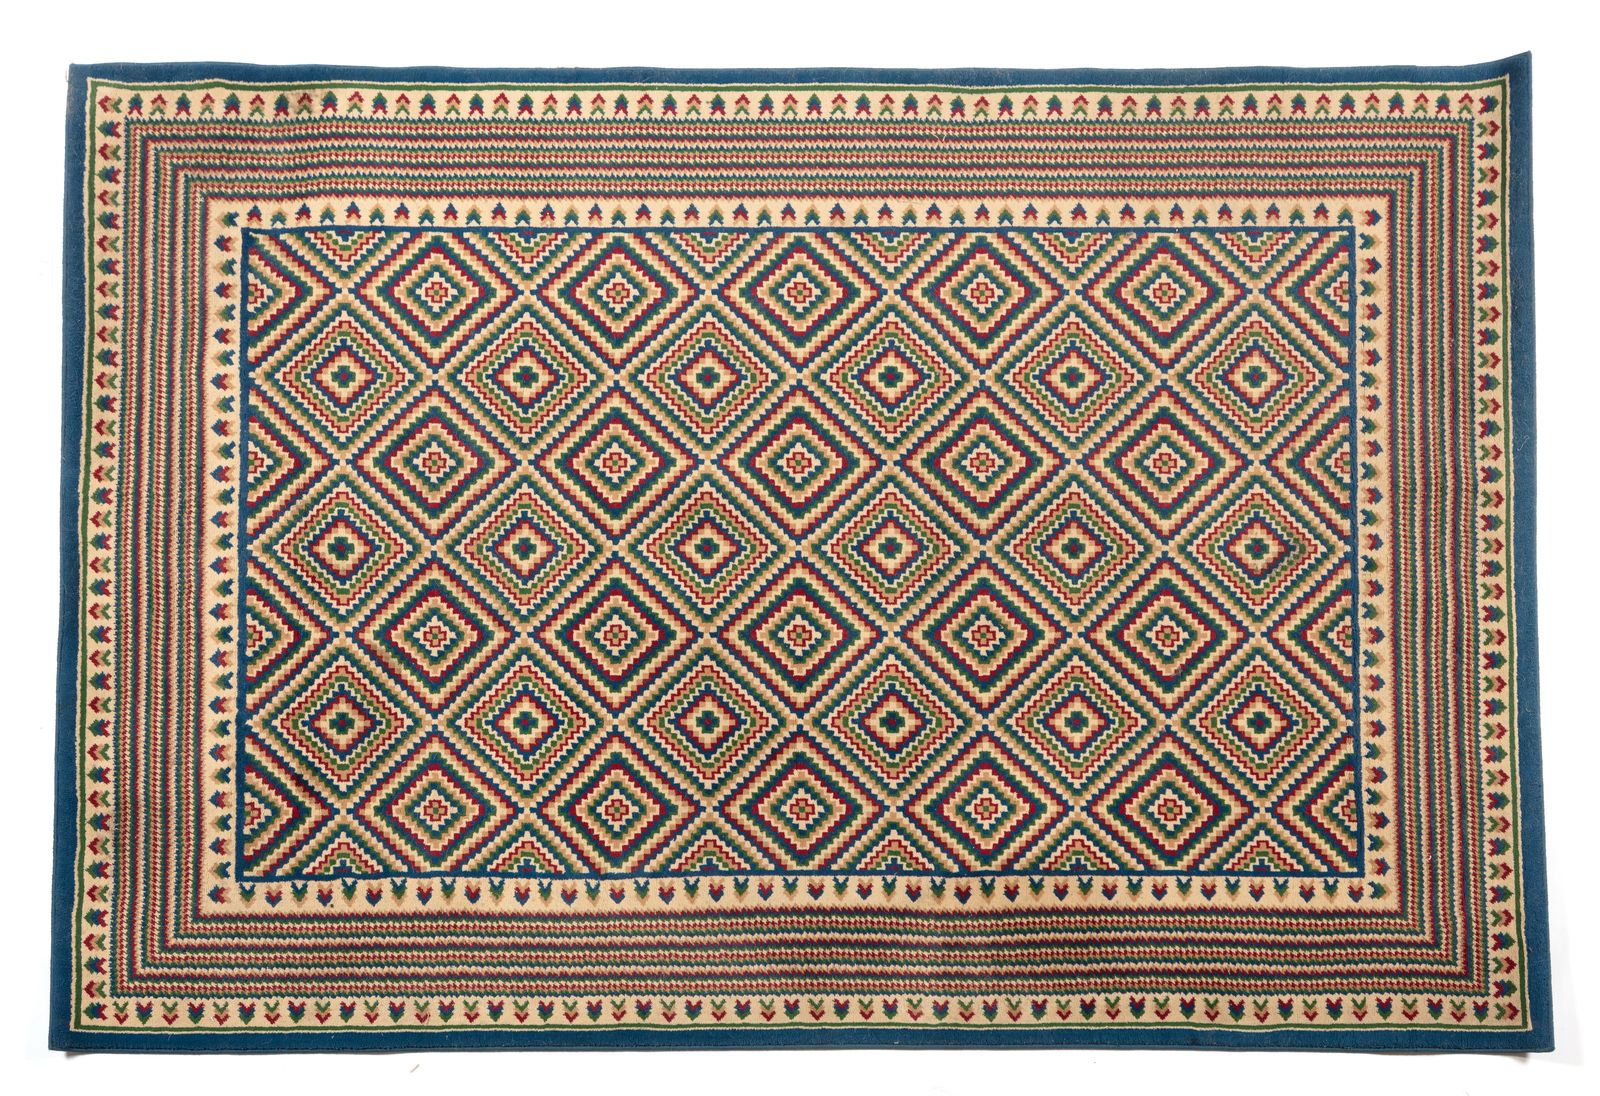 MISSONI MISSONI.地毯。制造标签，1970年代。厘米161,00 x 236,00。